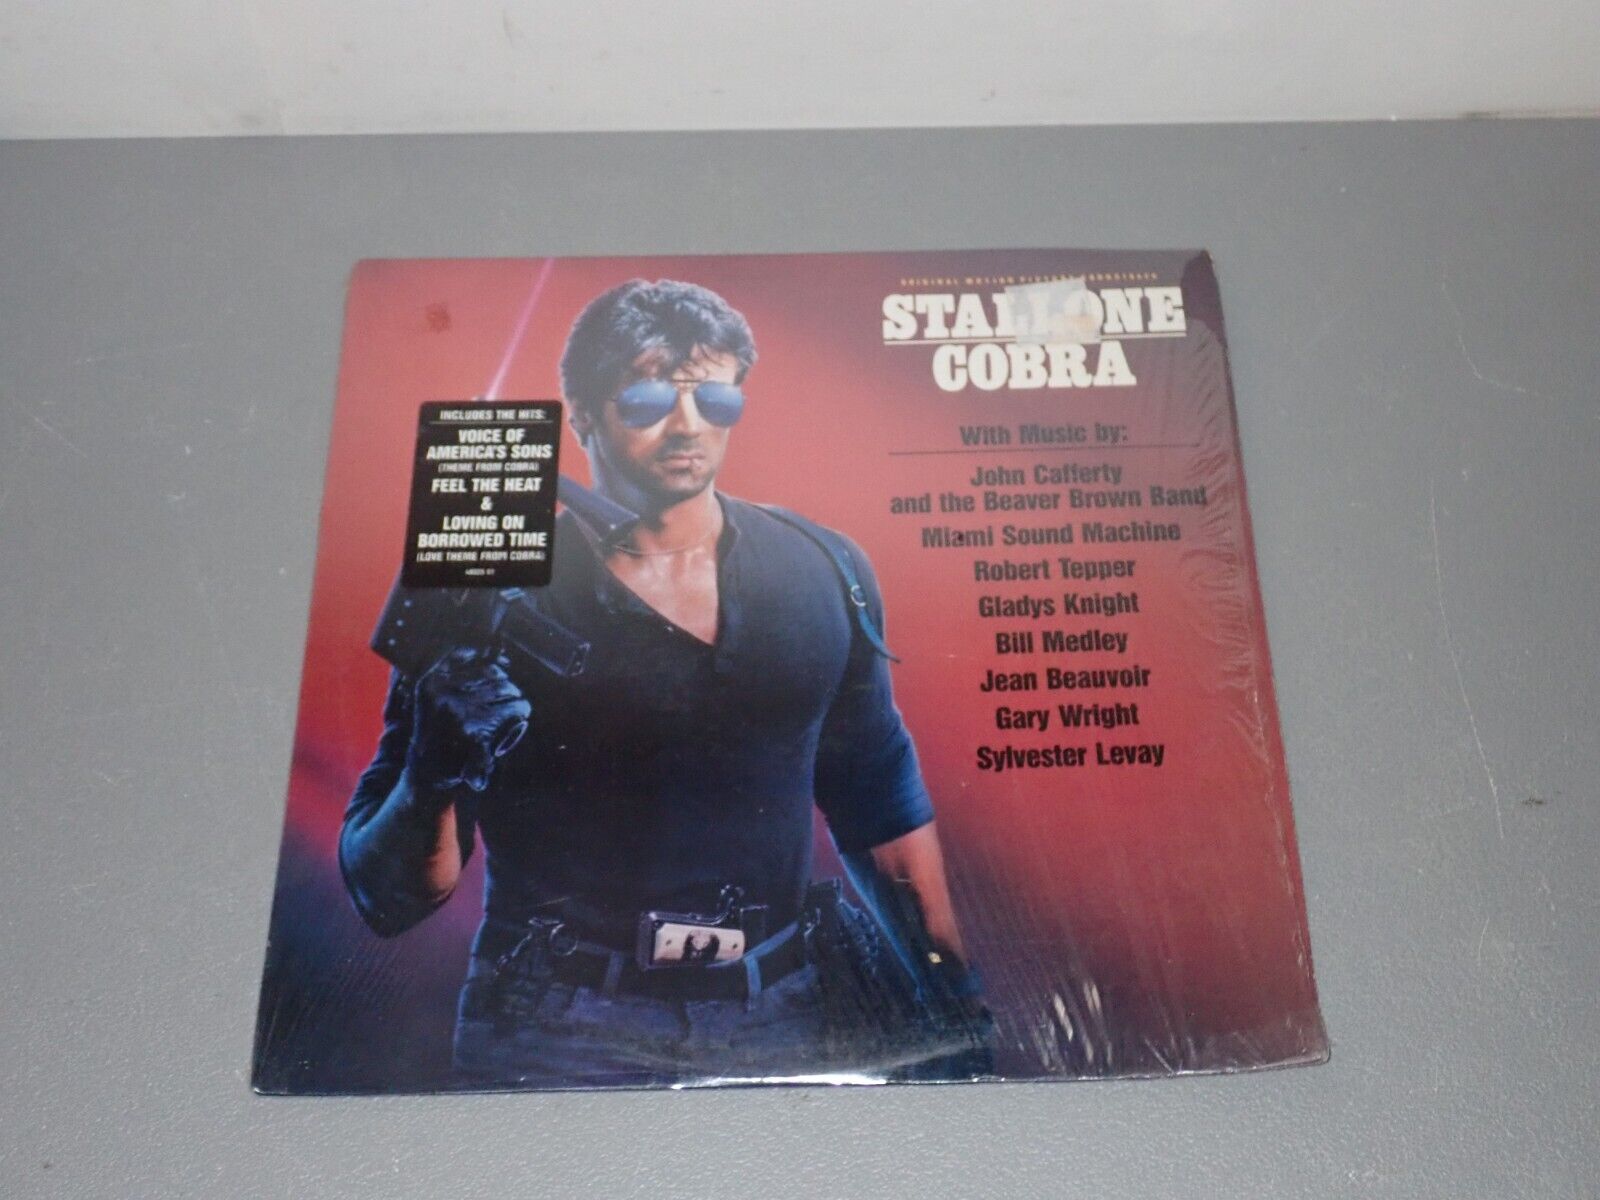 Cobra Original Motion Picture Soundtrack Vinyl LP, Scotti Brothers SZ 40325, NM